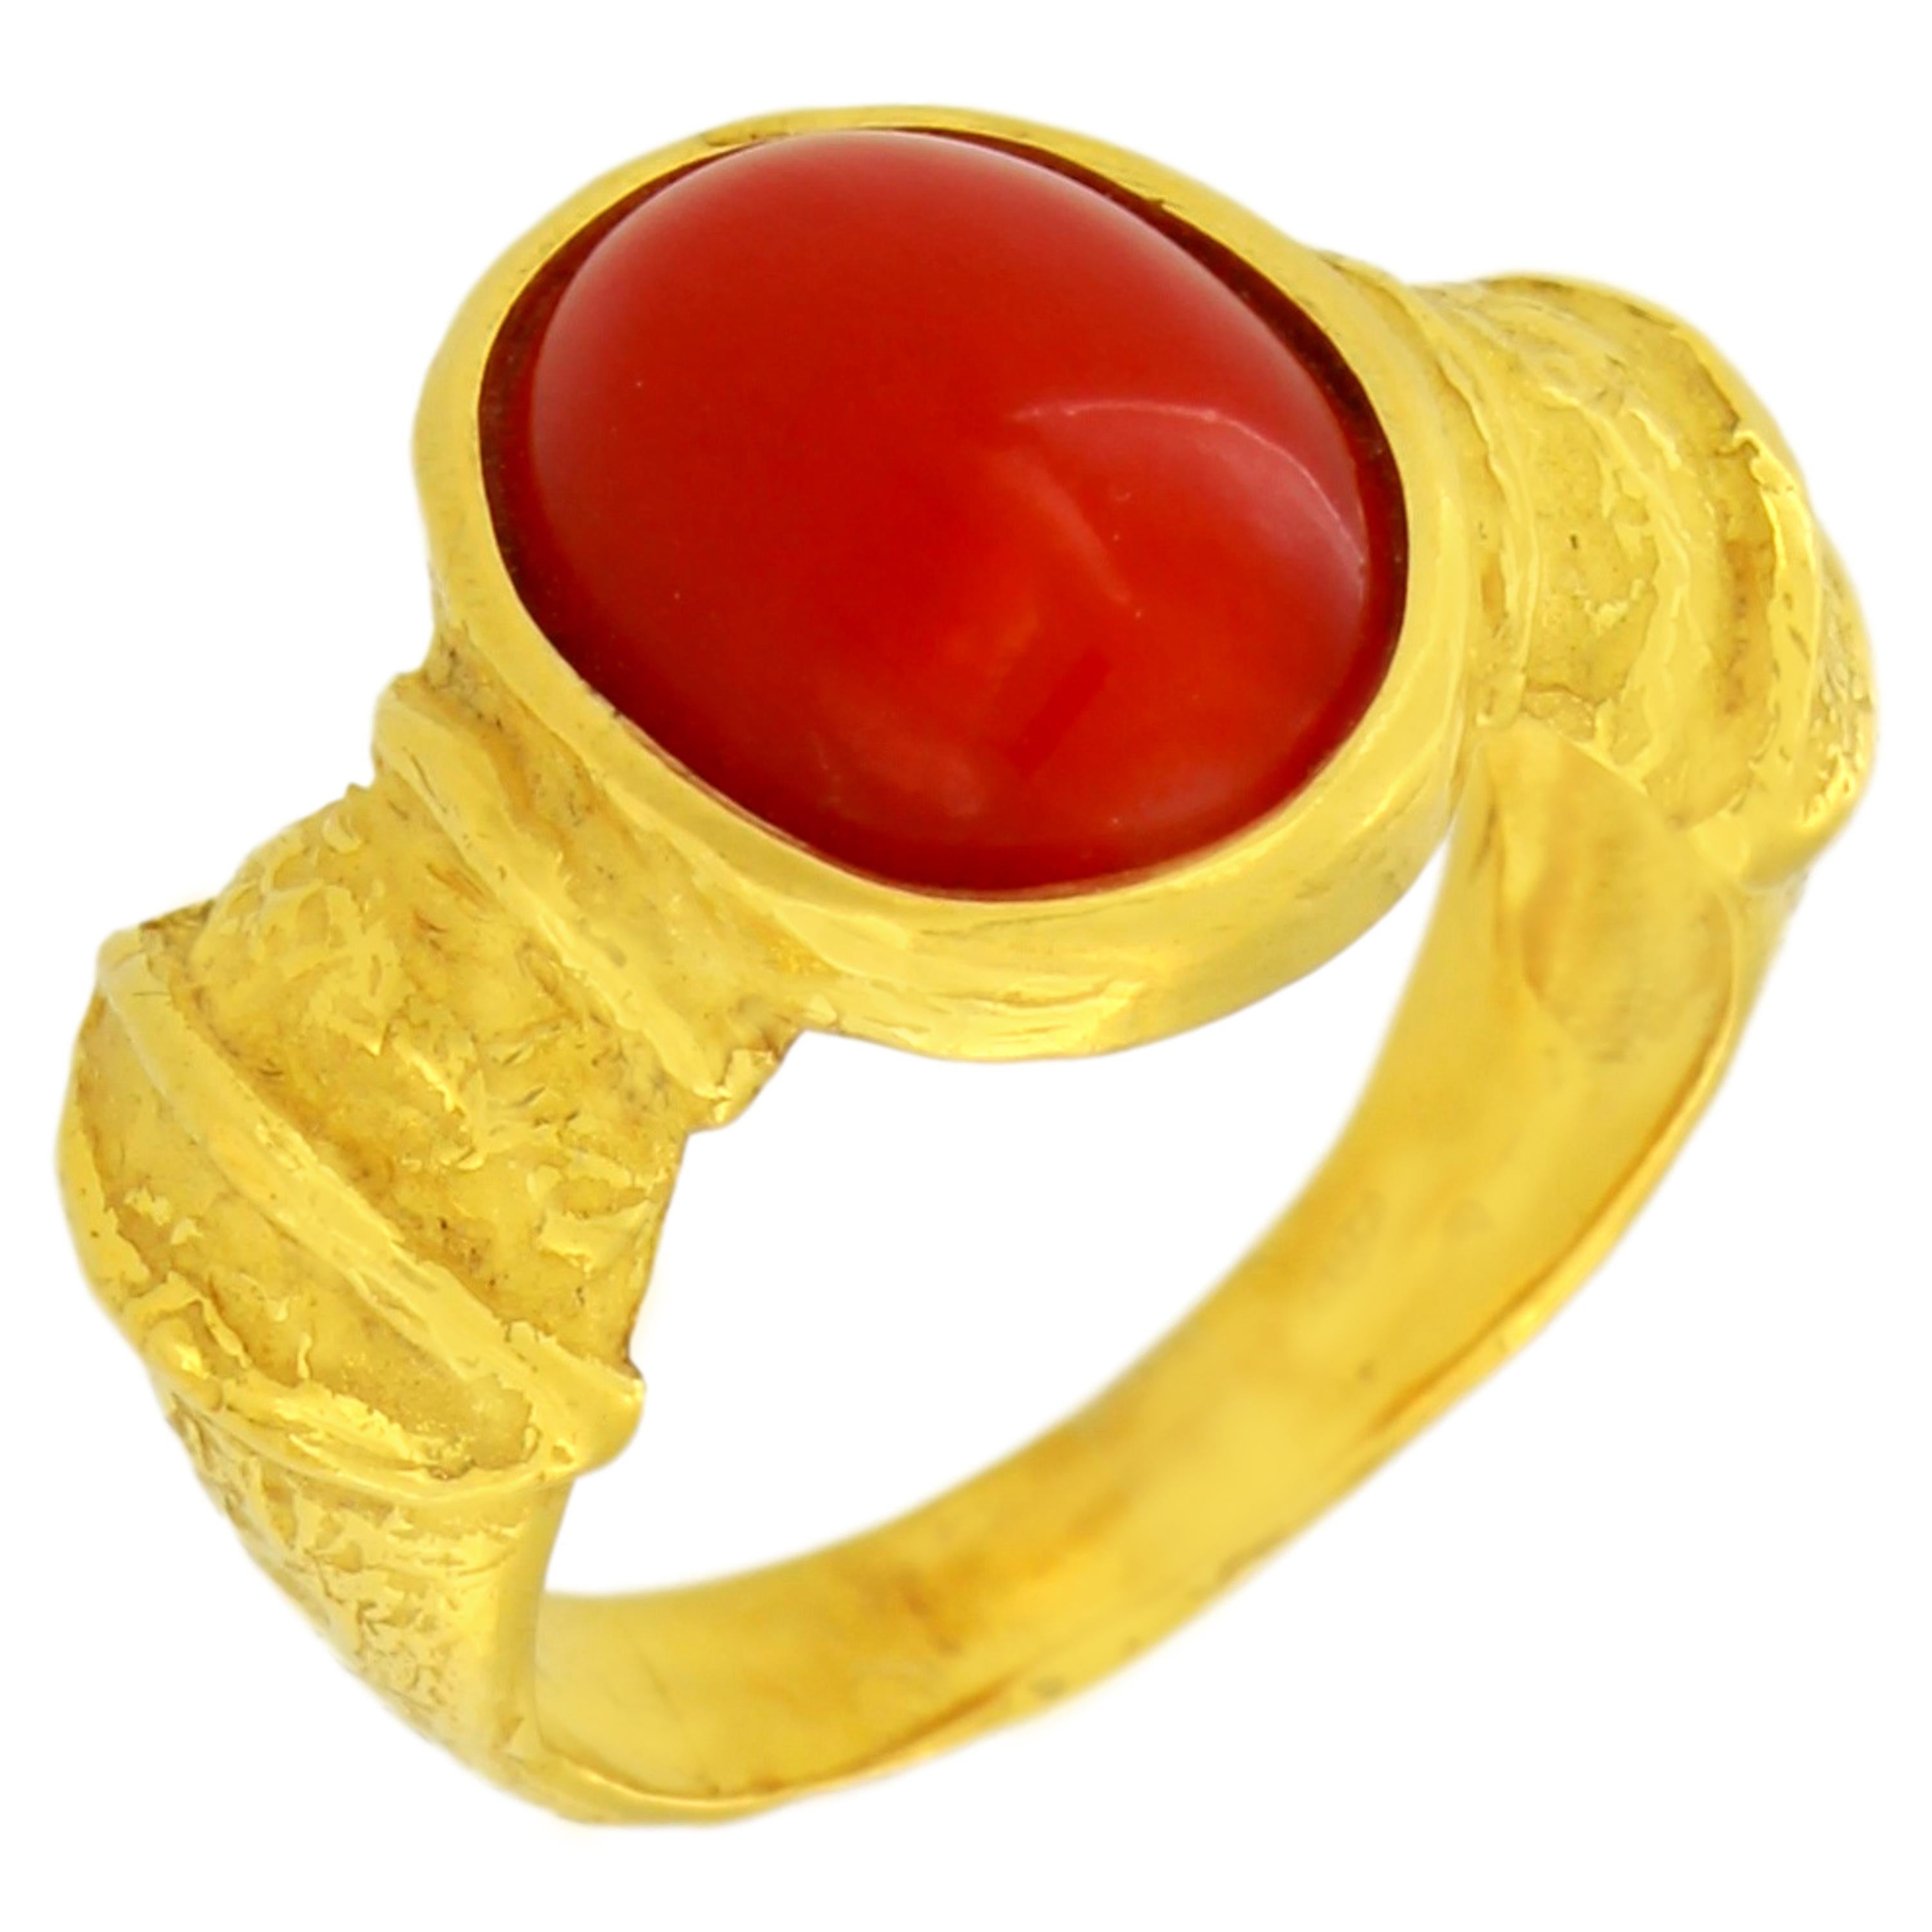 Sacchi Roman Style Ring 18 Karat Satin Yellow Gold